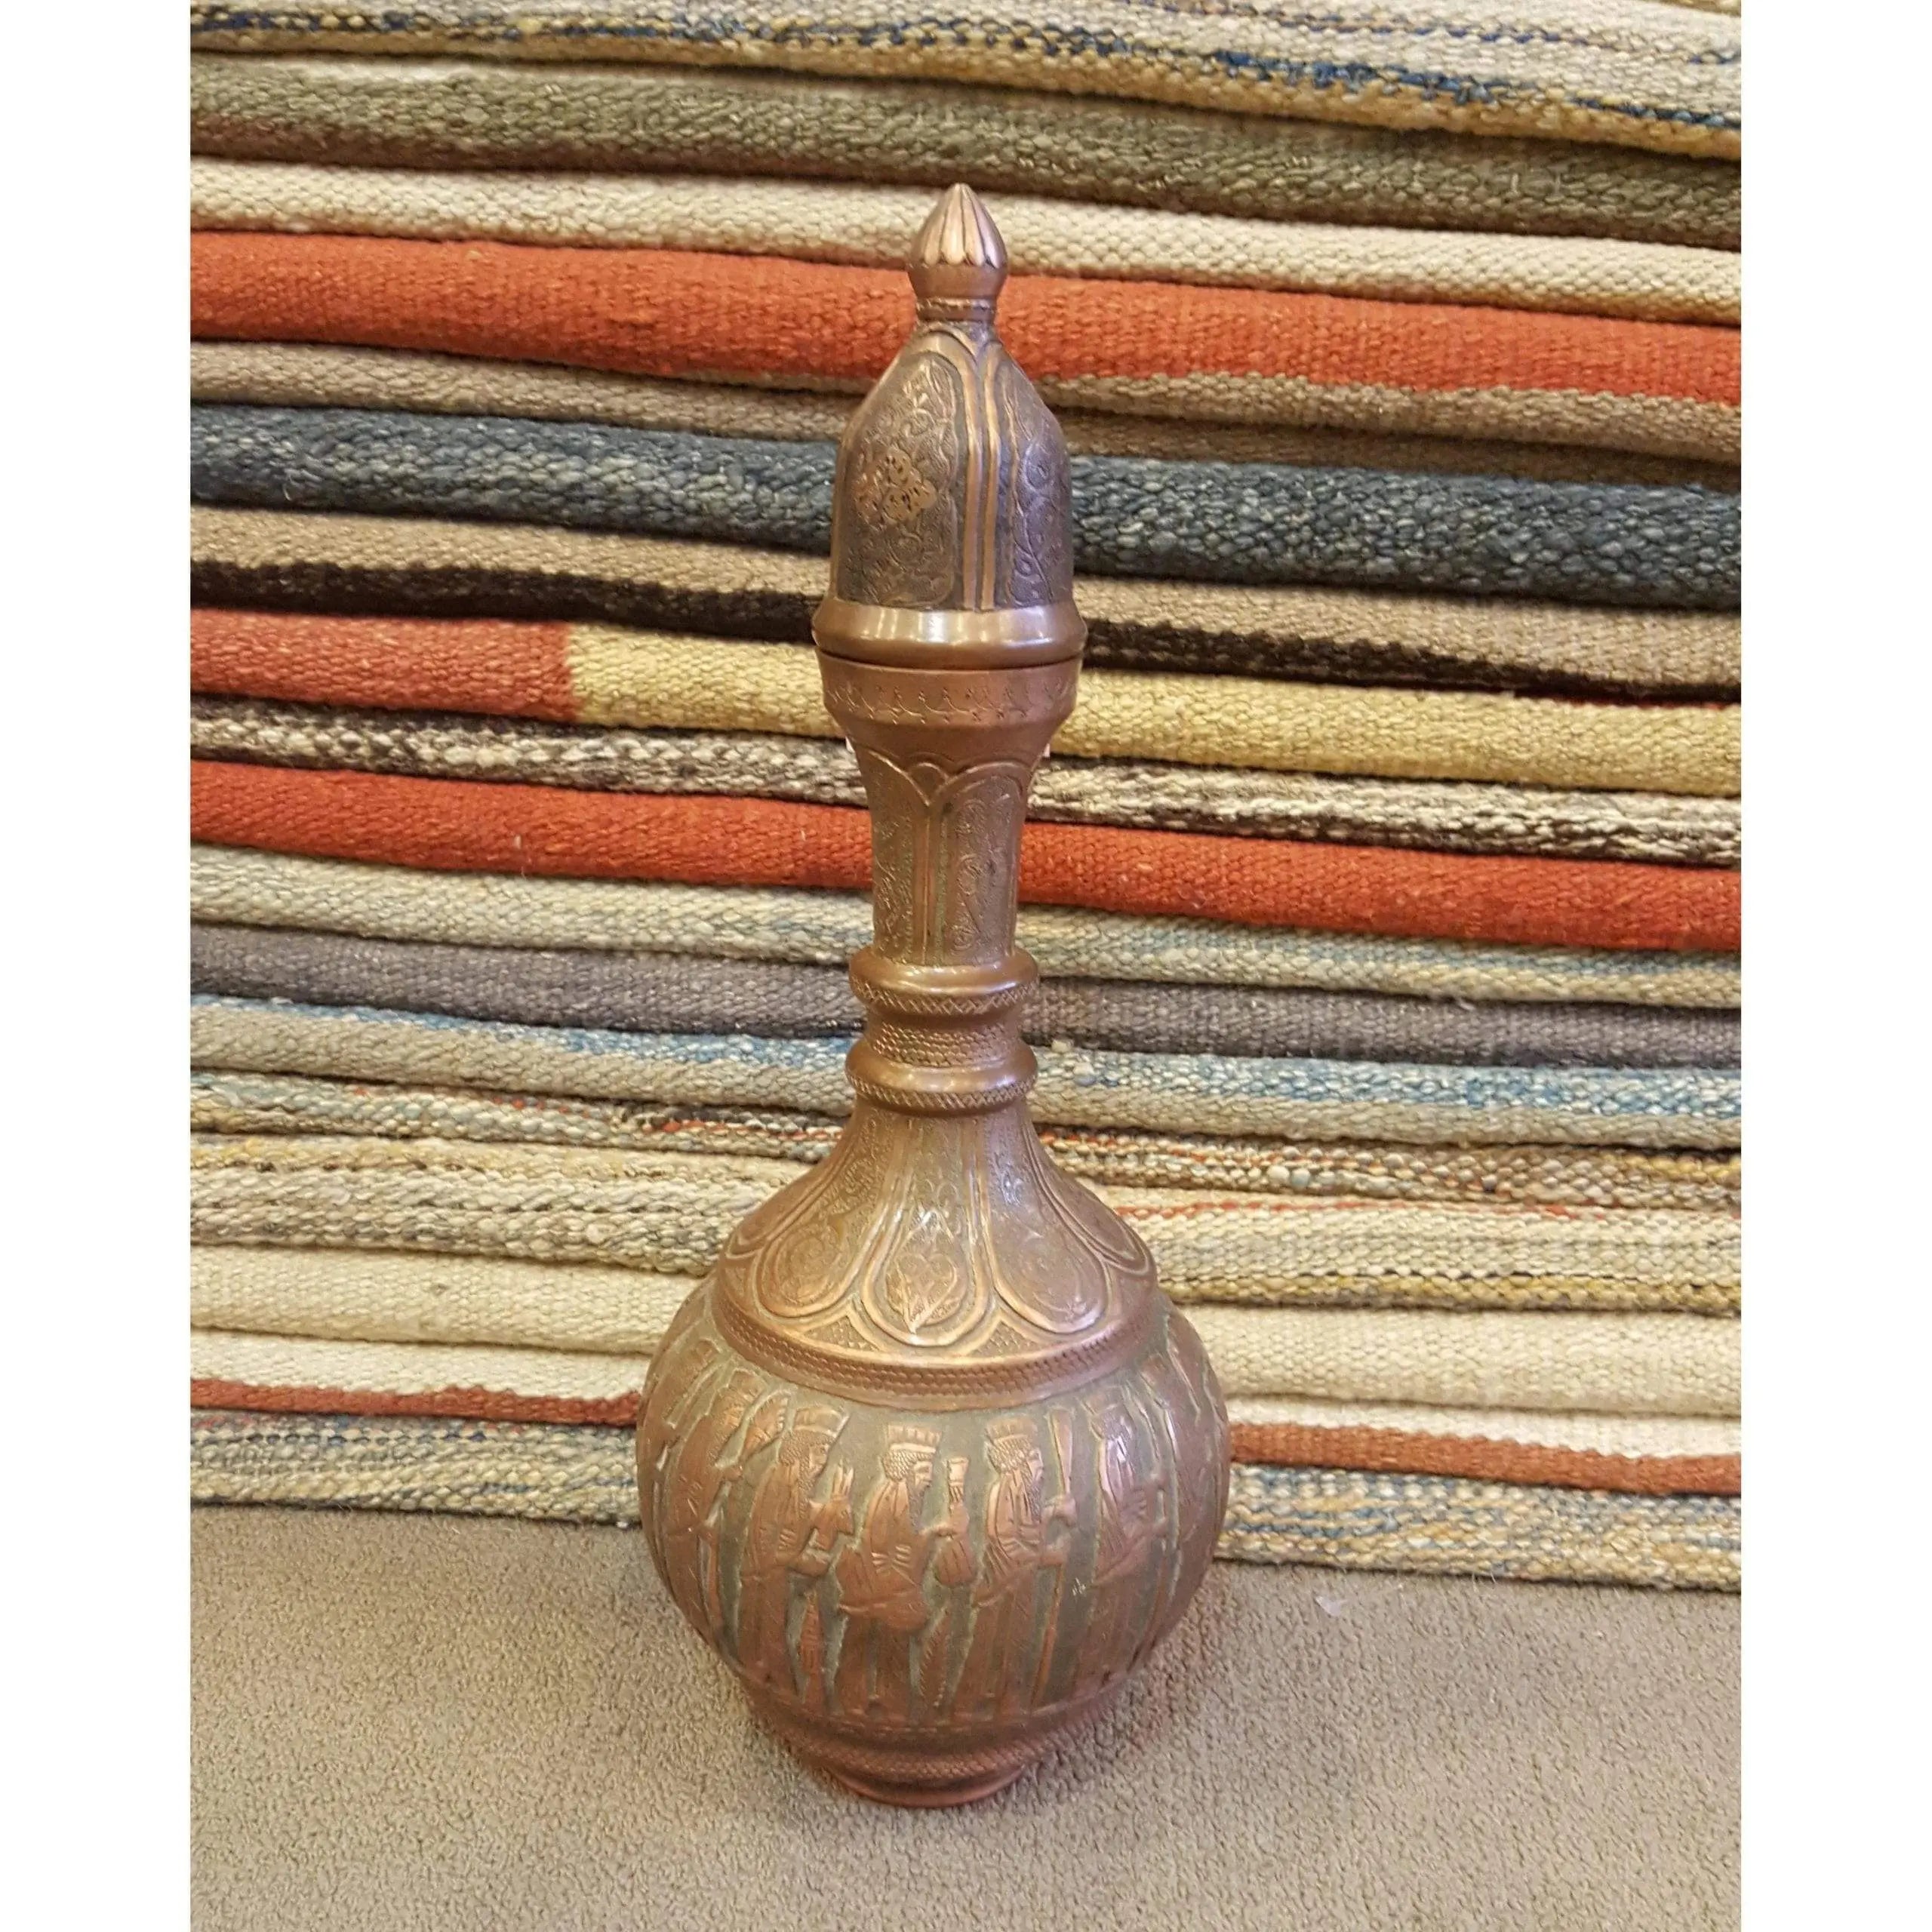 Authentic Art Antique Persian Engraved Brass Vase Ghalamzani 16" X 7" Abcca0112